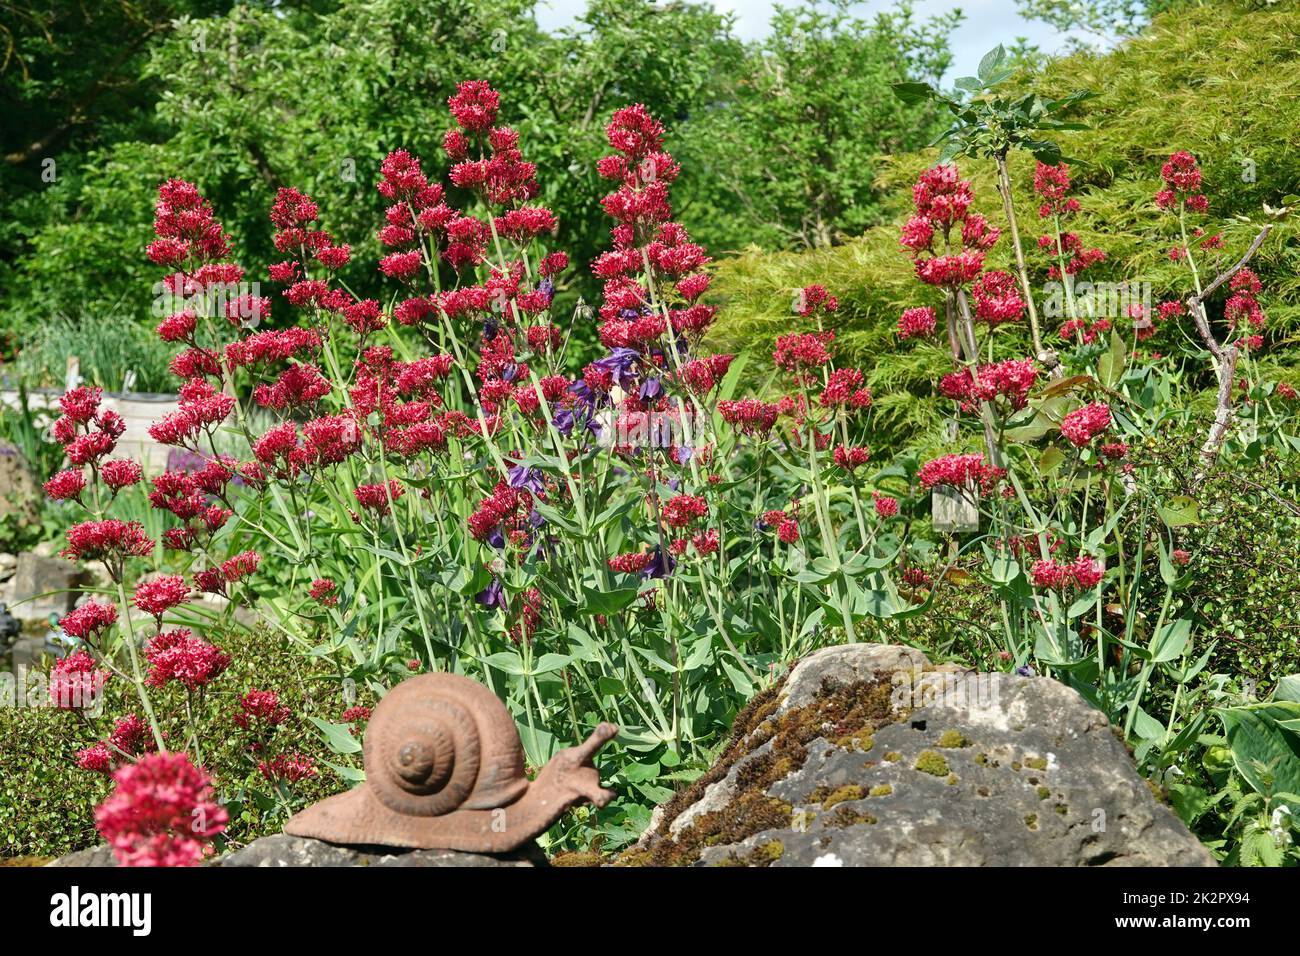 Sporrote nblume - Centranthus ruber, blühende Pflanze im naturanahen Garten Banque D'Images